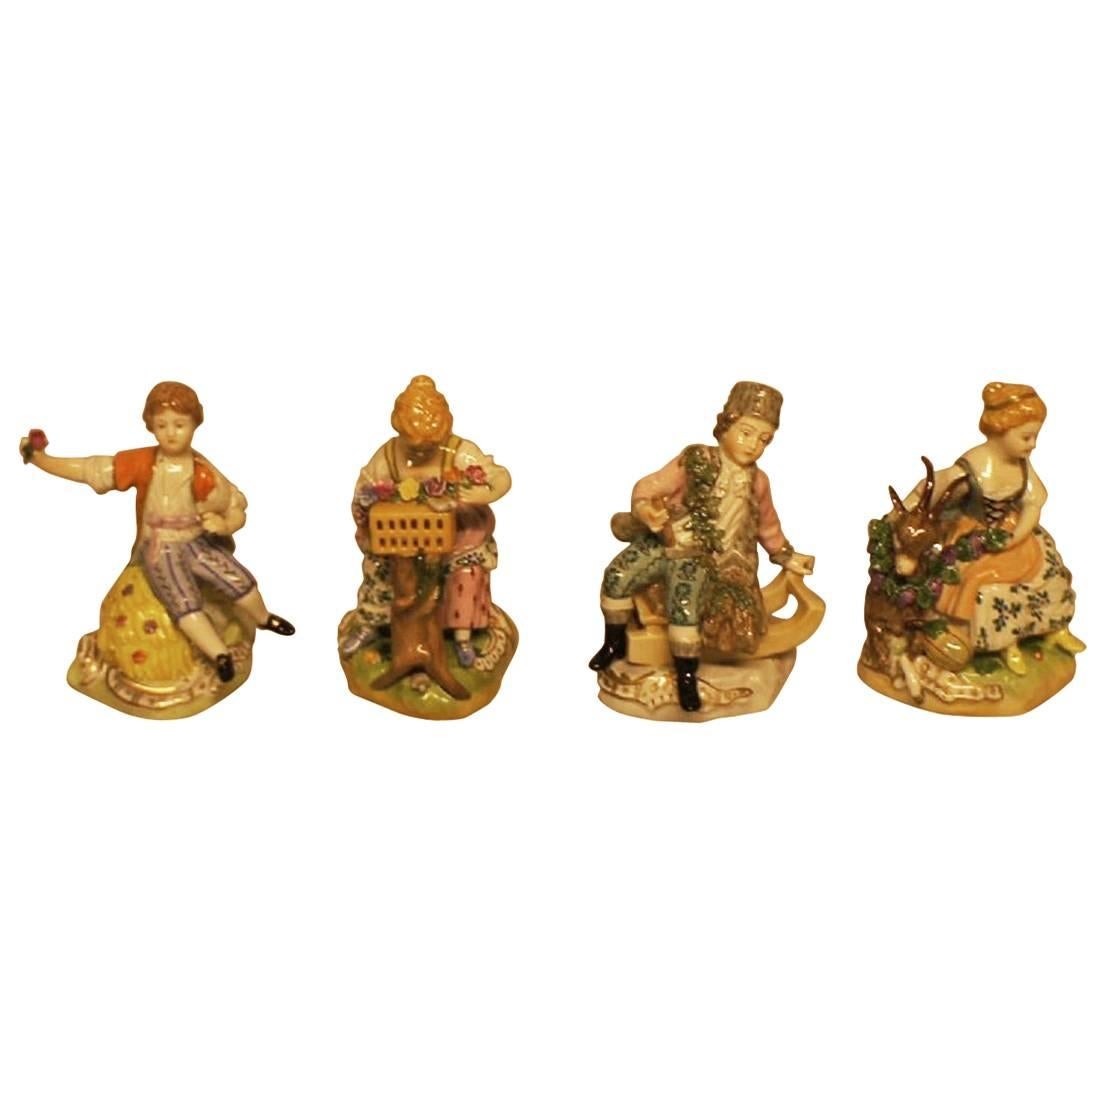 Four German Dresden Porcelain Figurines in Overglaze Technic For Sale